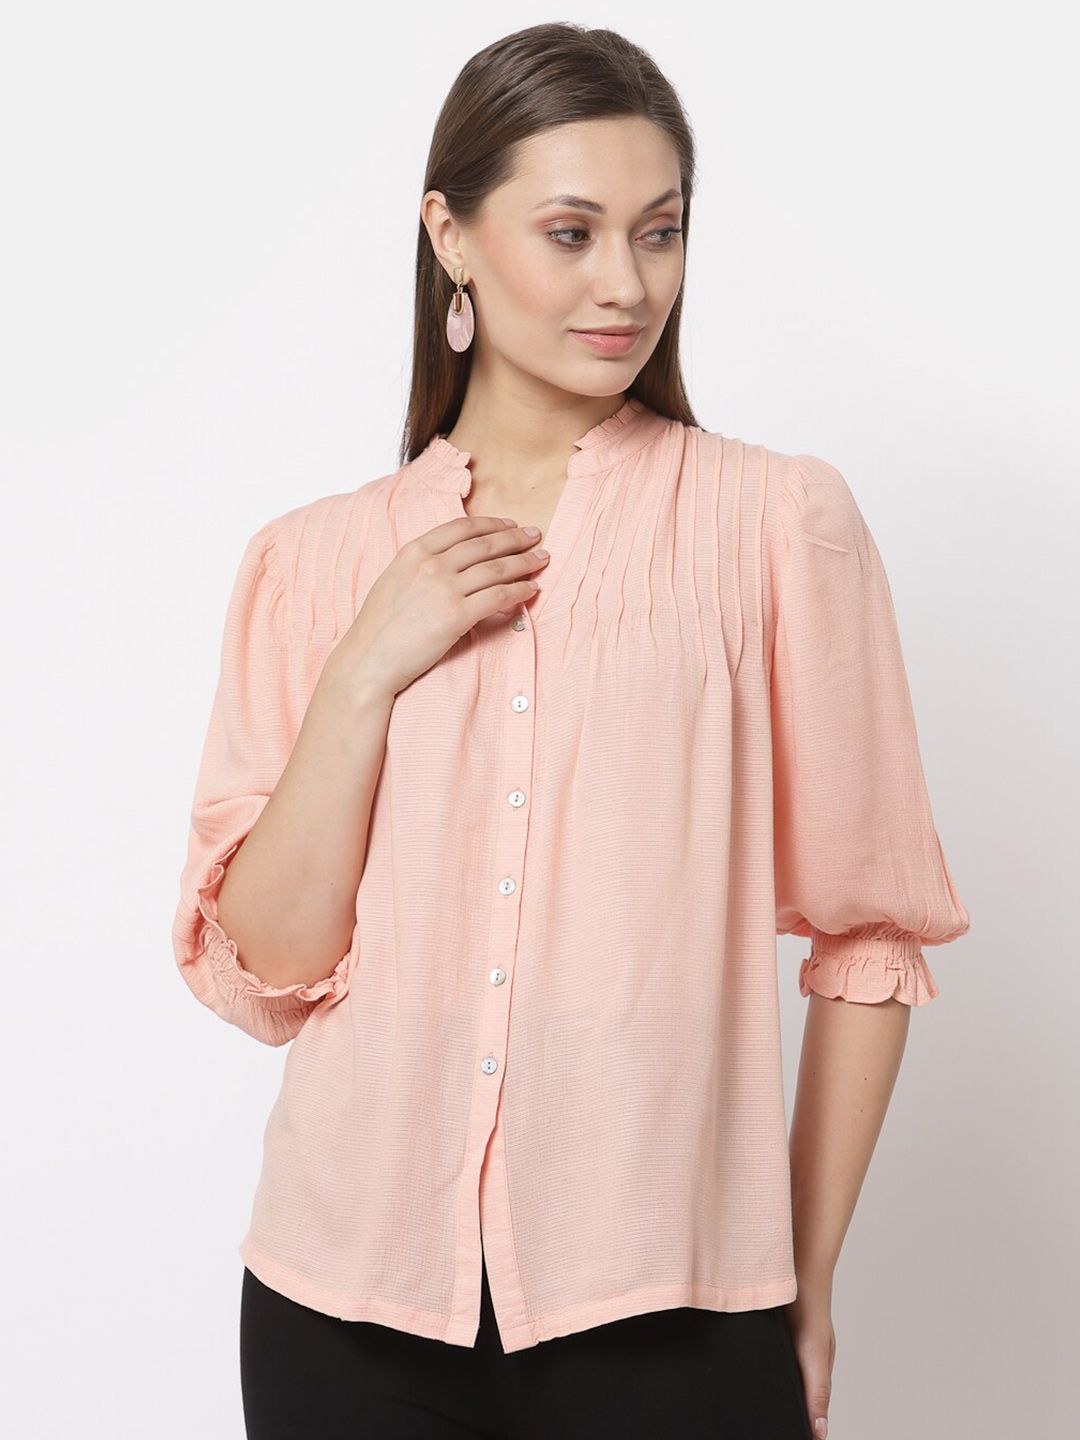 Gipsy Peach-Coloured Mandarin Collar Shirt Style Top Price in India